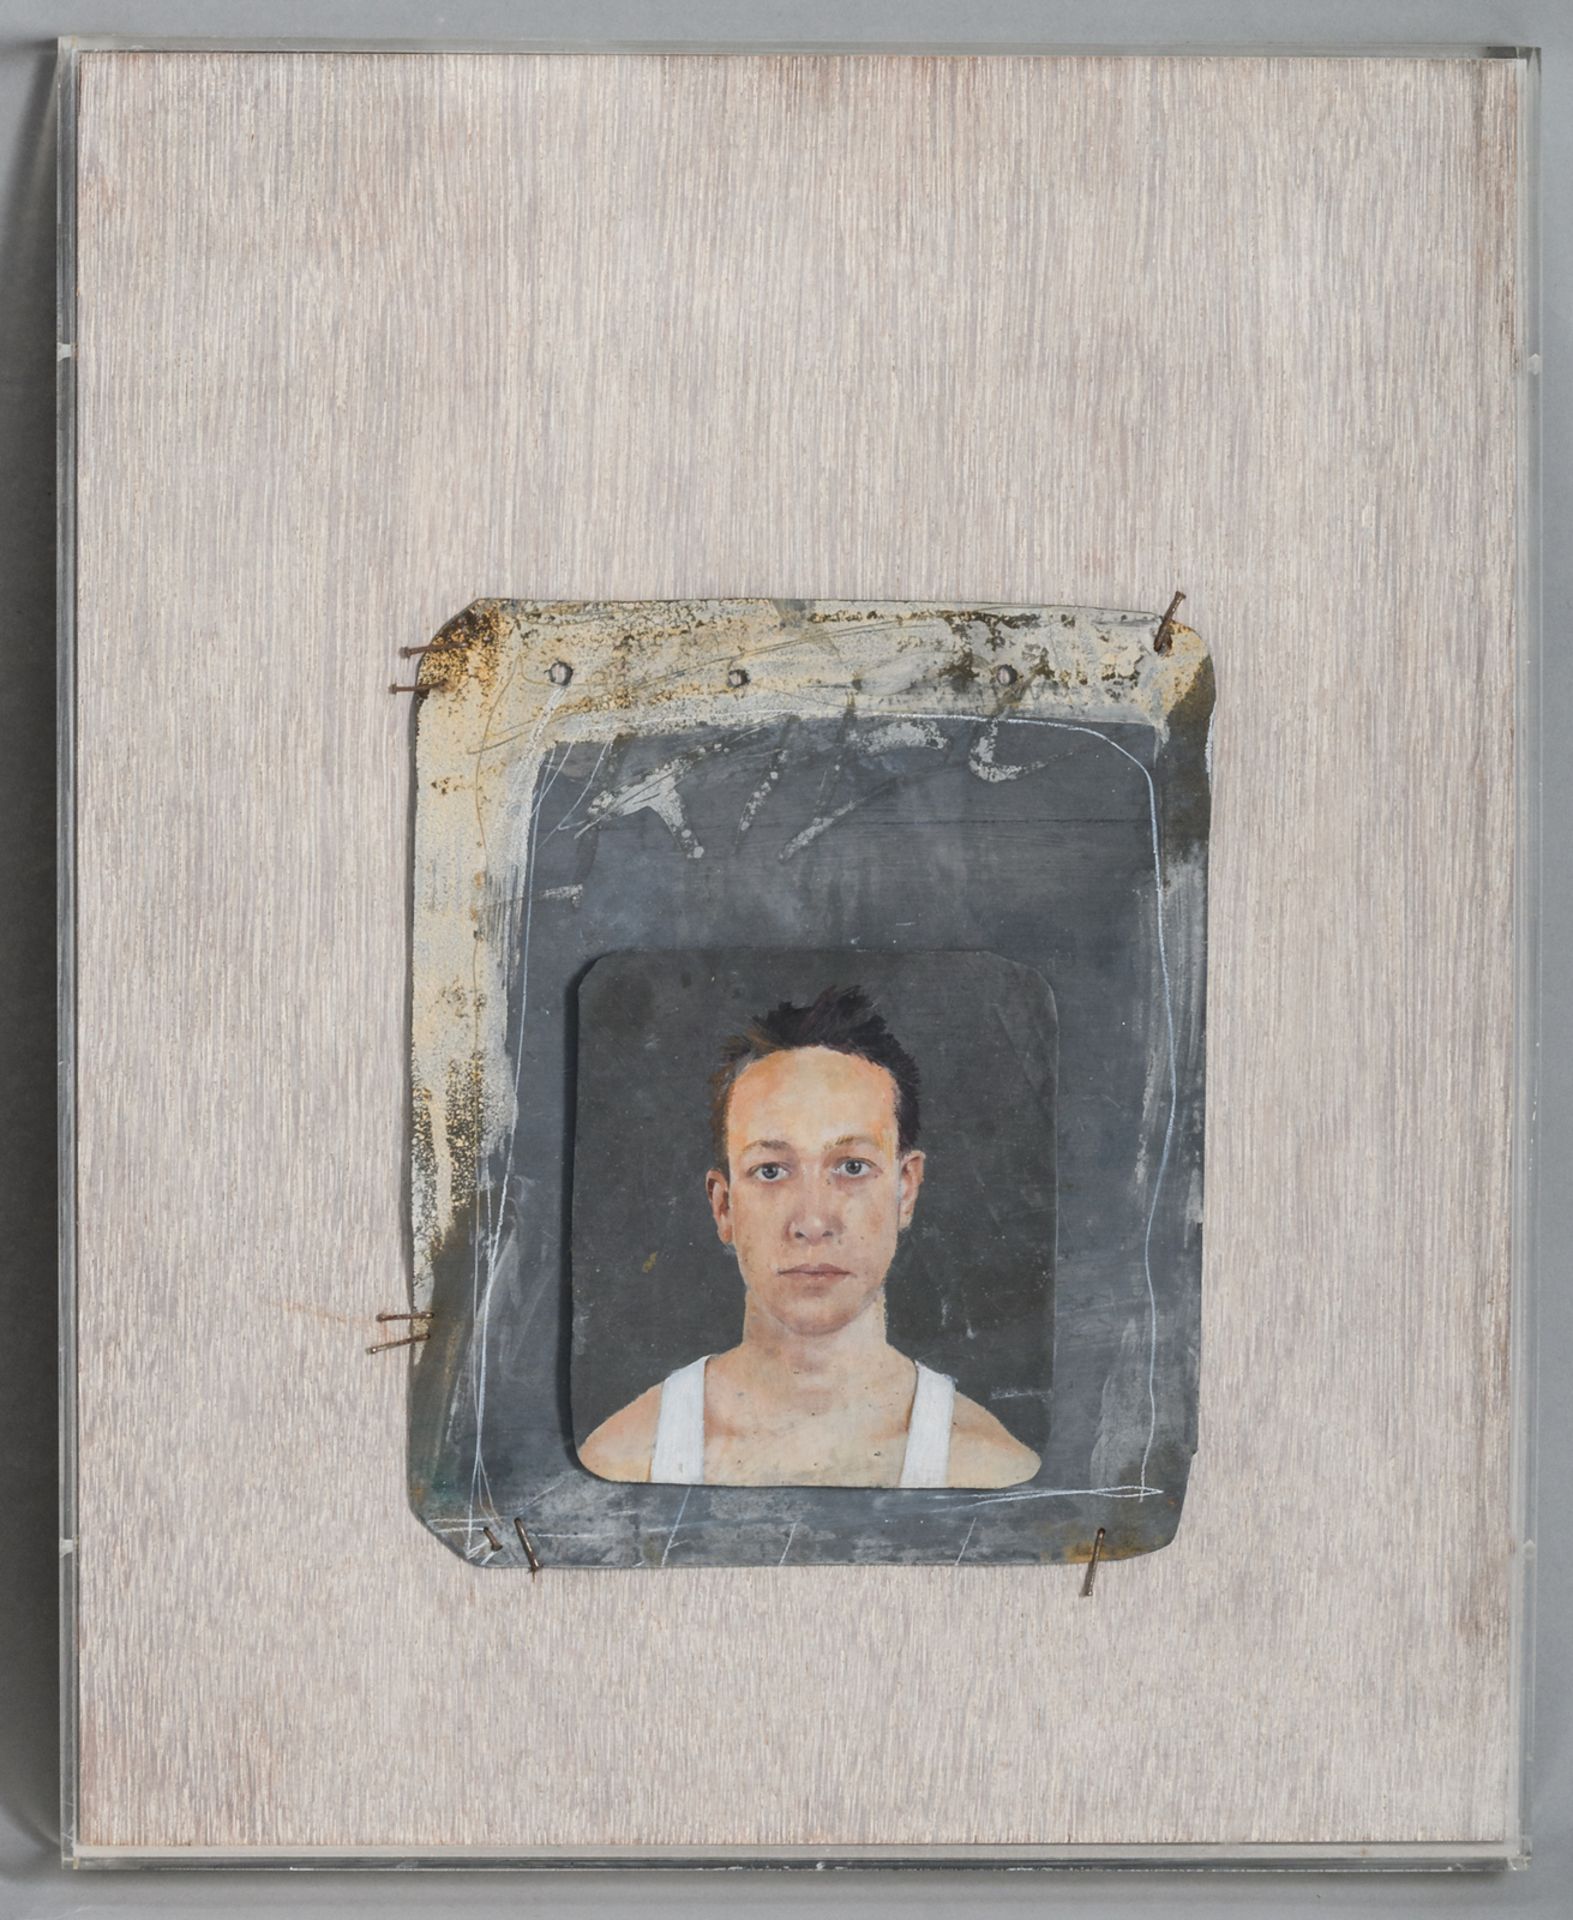 Michiels D., 'Max', oil on zinc, in a plexi box, 41 x 51 cm - Image 2 of 5